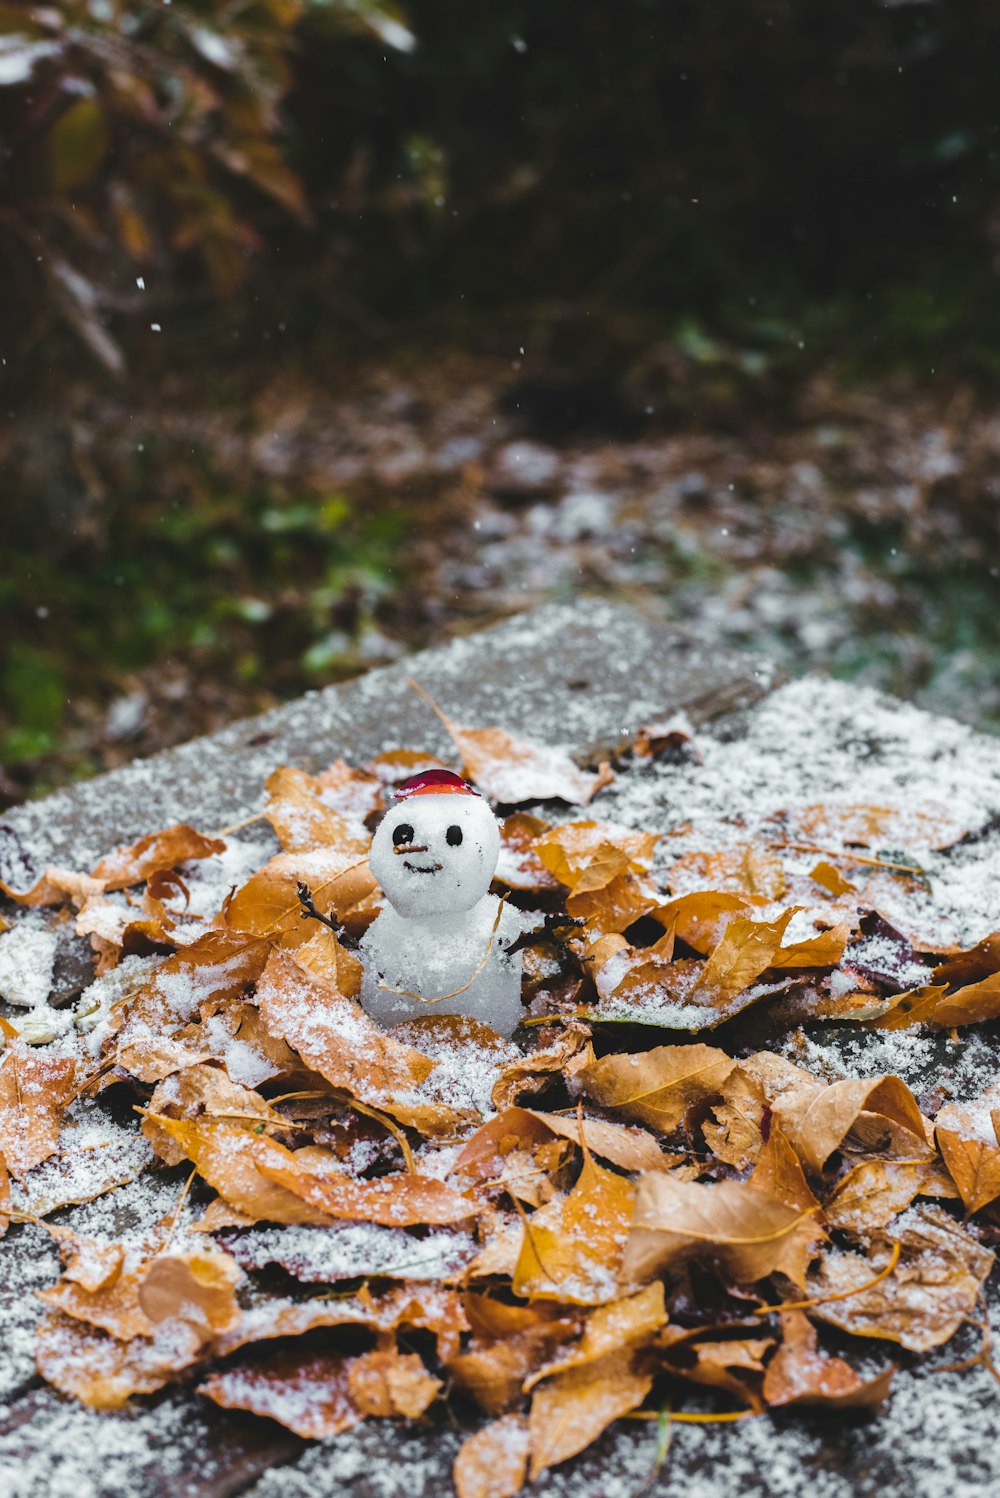 snowman figurine on brown dried leaves